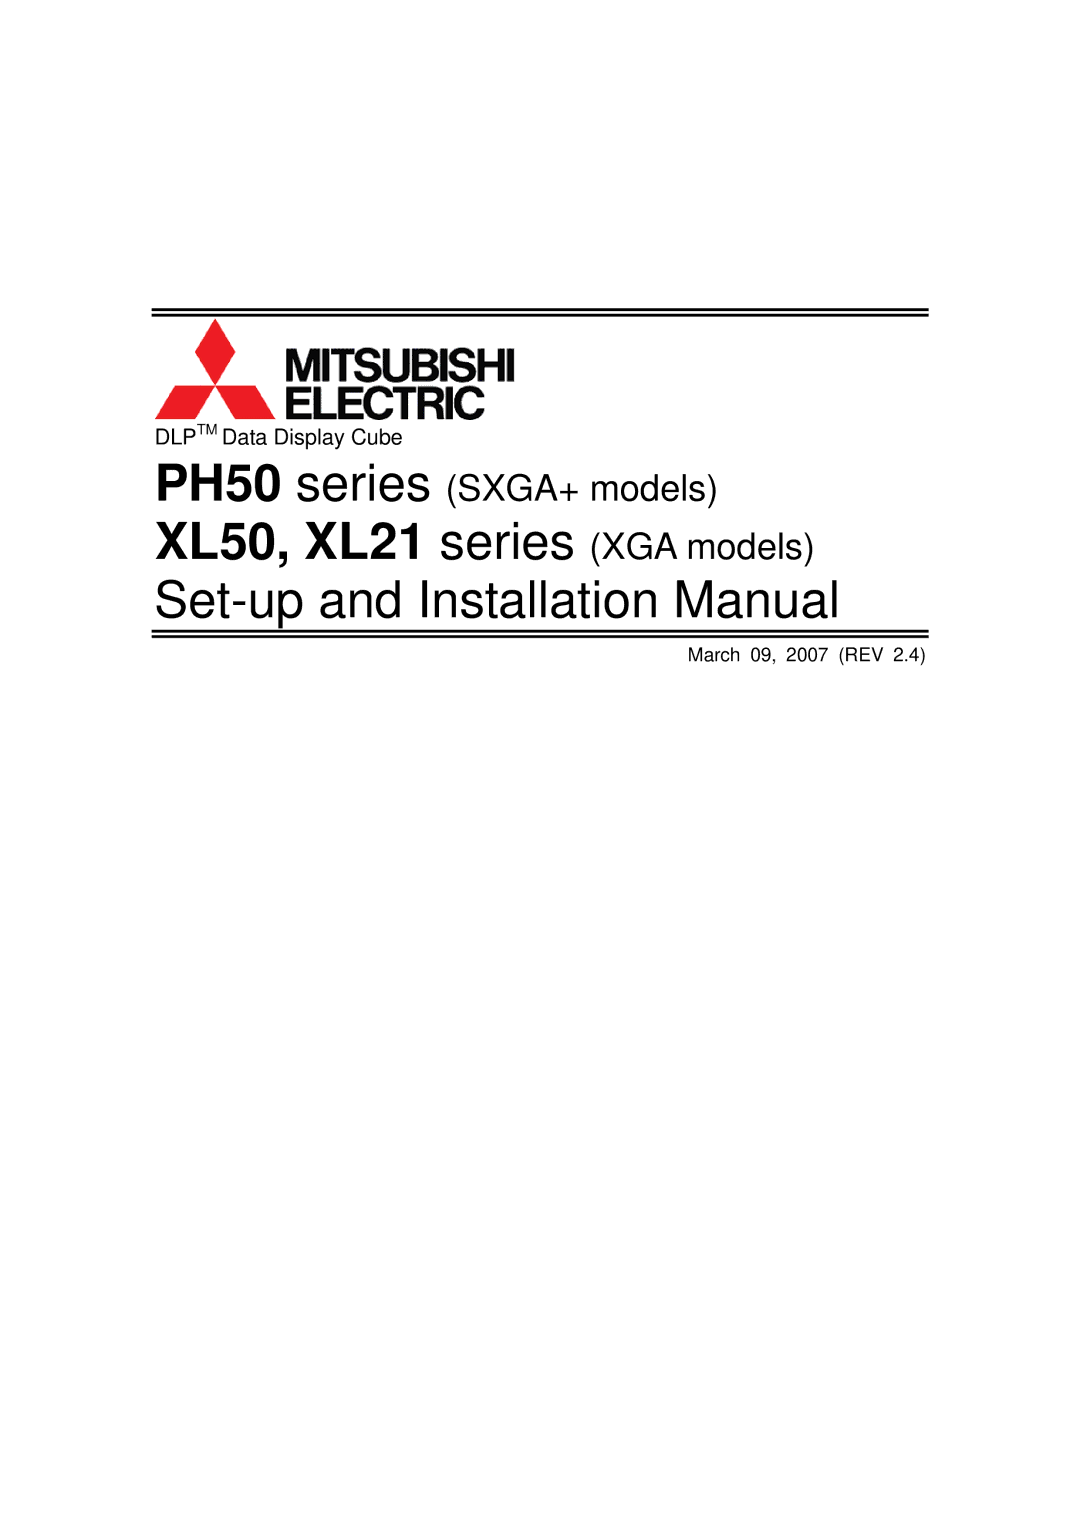 Mitsubishi Electronics XL21, XL50 installation manual Set-up and Installation Manual 